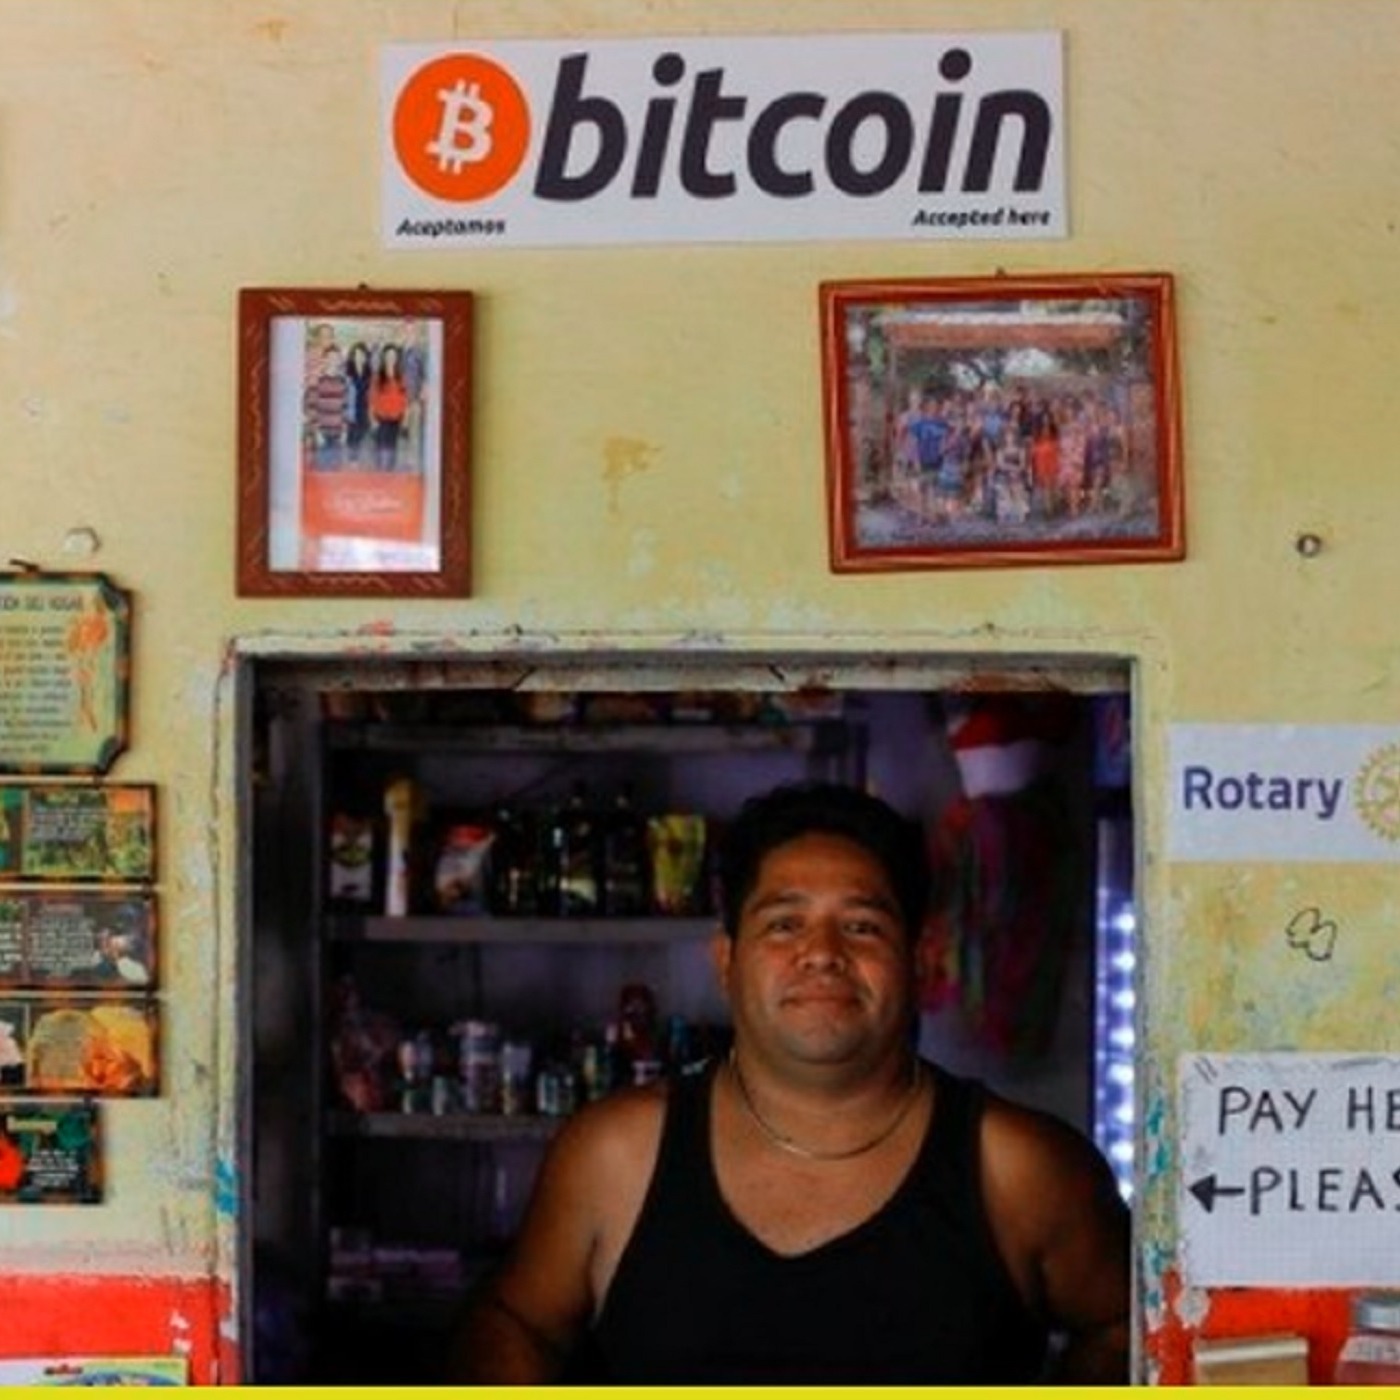 El Salvador Adopts Bitcoin as Its National Currency